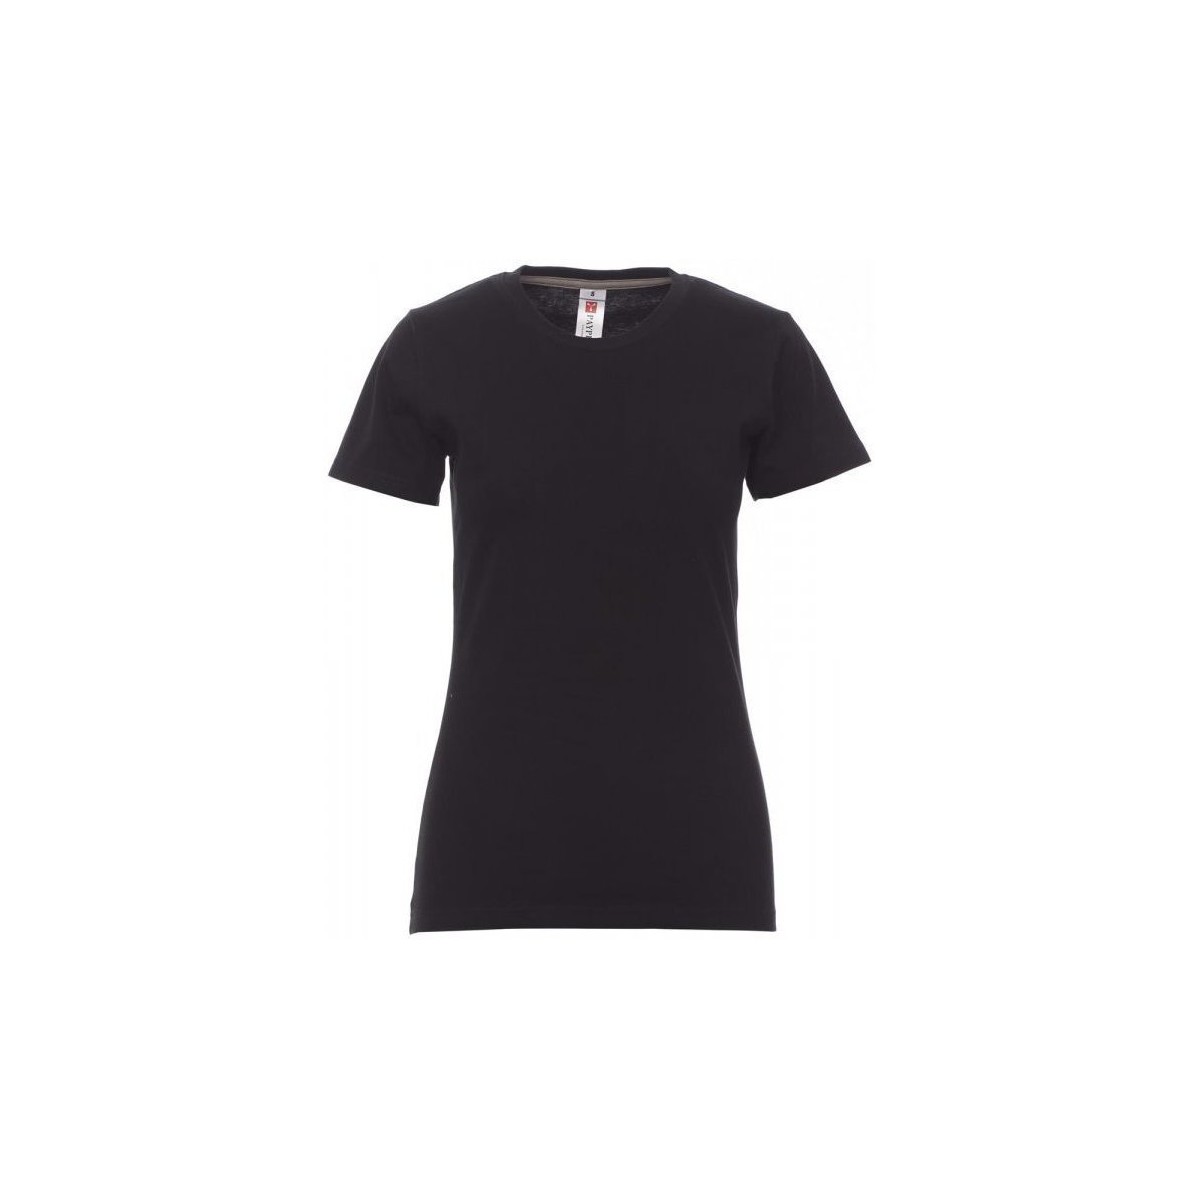 Textiel Dames T-shirts korte mouwen Payper Wear T-shirt femme Payper Sunrise Zwart